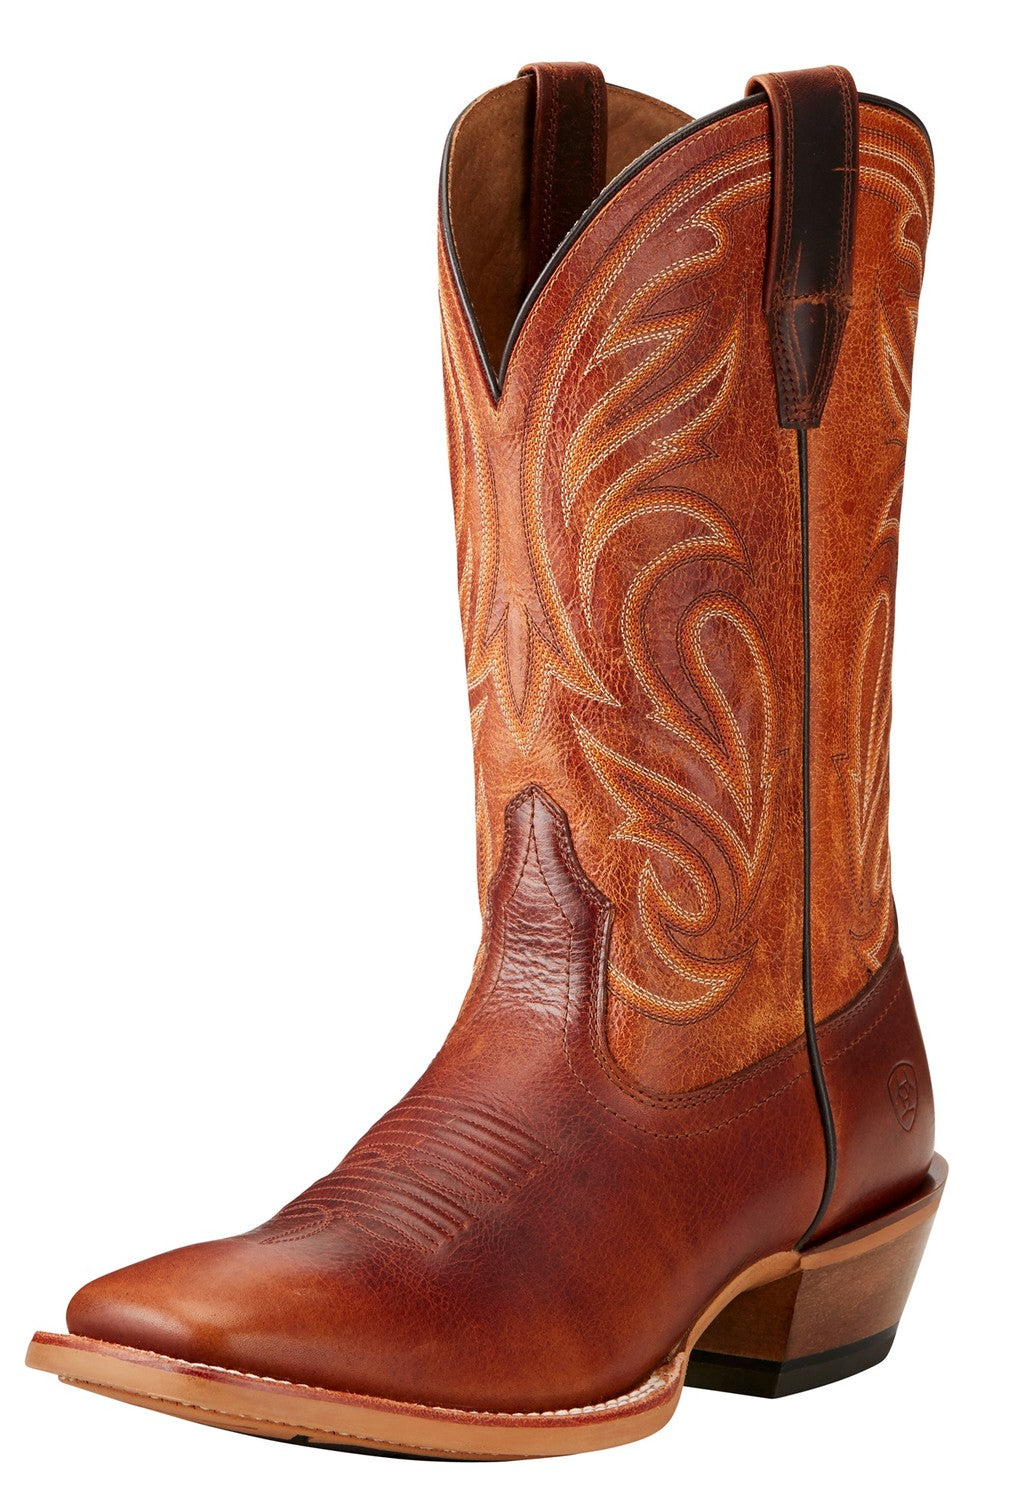 Ariat® Men's Fire Creek Cowboy Boots